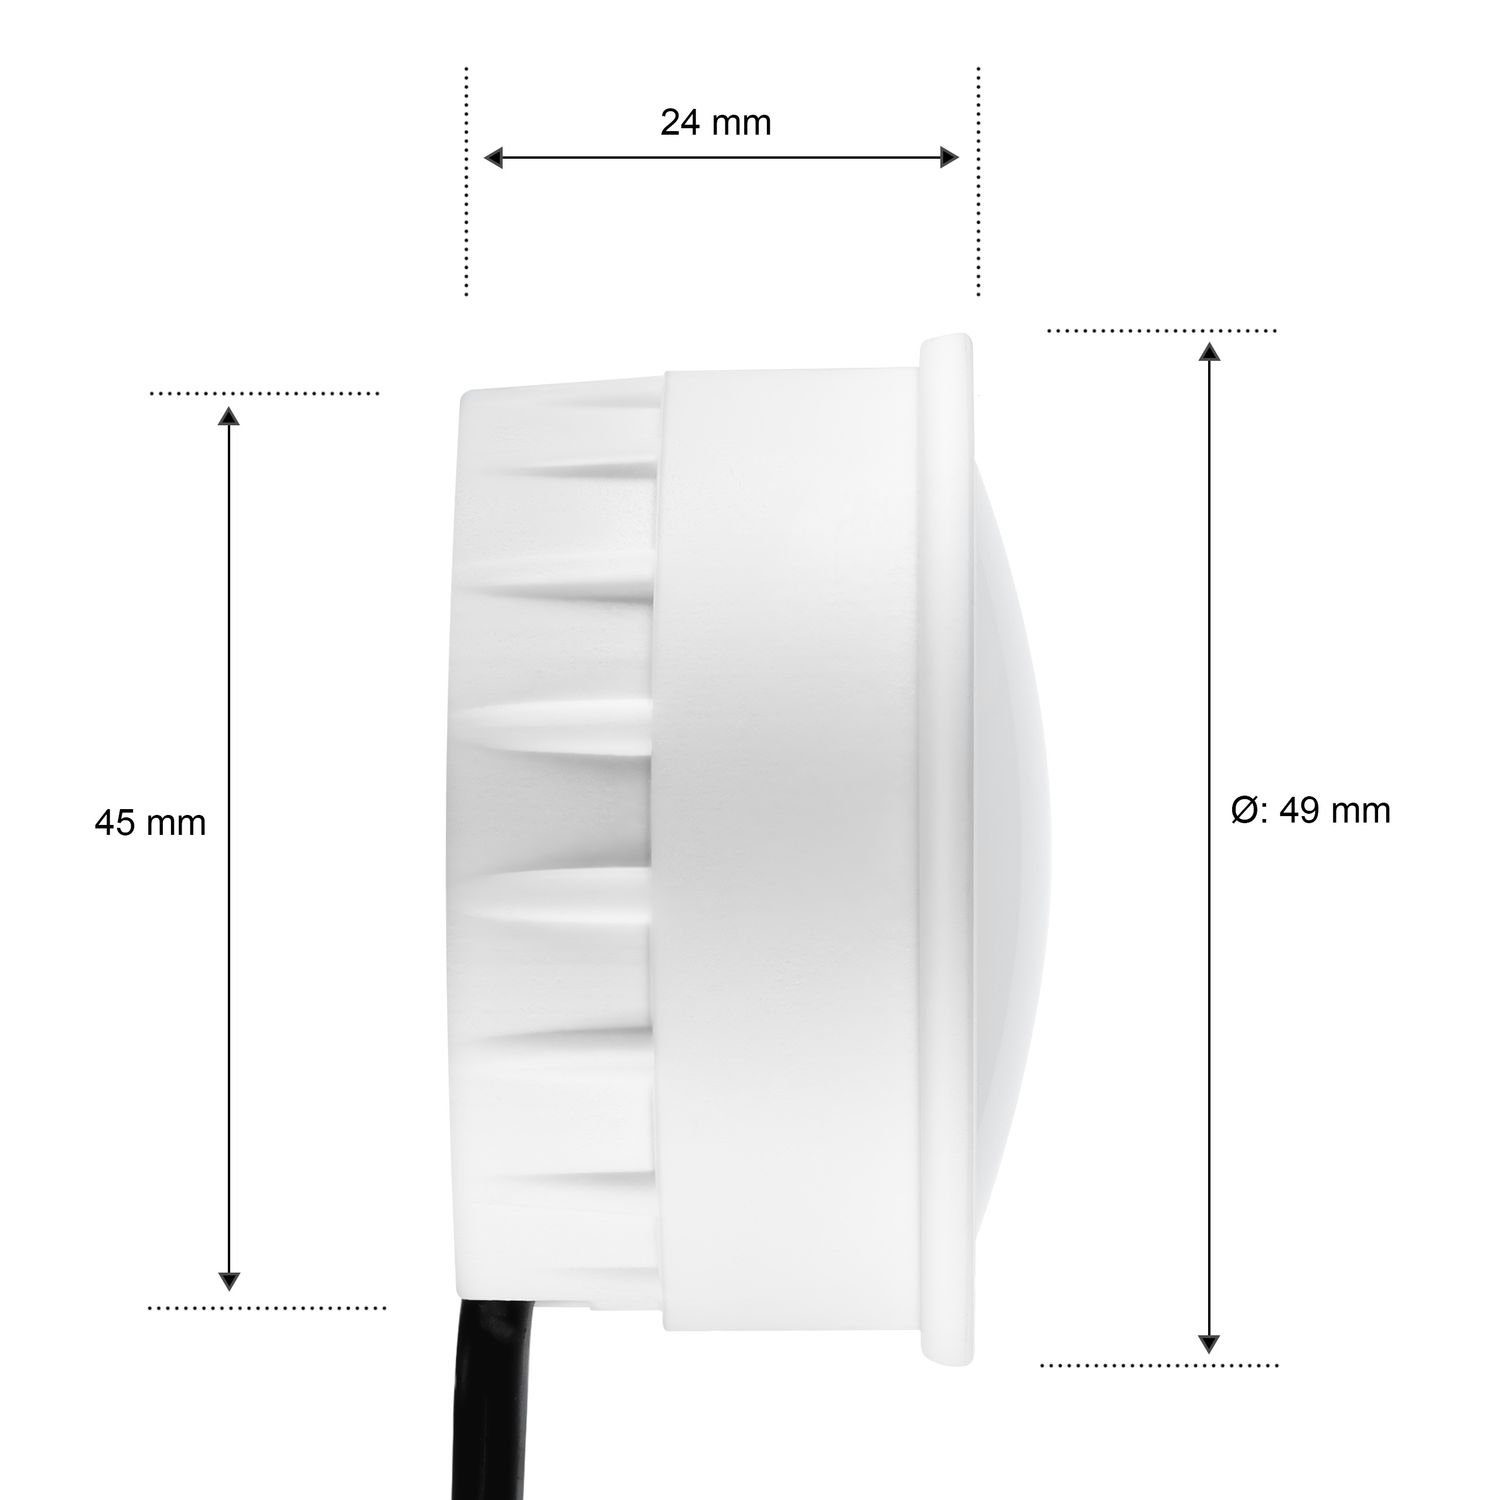 LEDANDO LED Einbaustrahler 10er Einbaustrahler Set matt flach CCT extra LED - mit in weiß 5W RGB